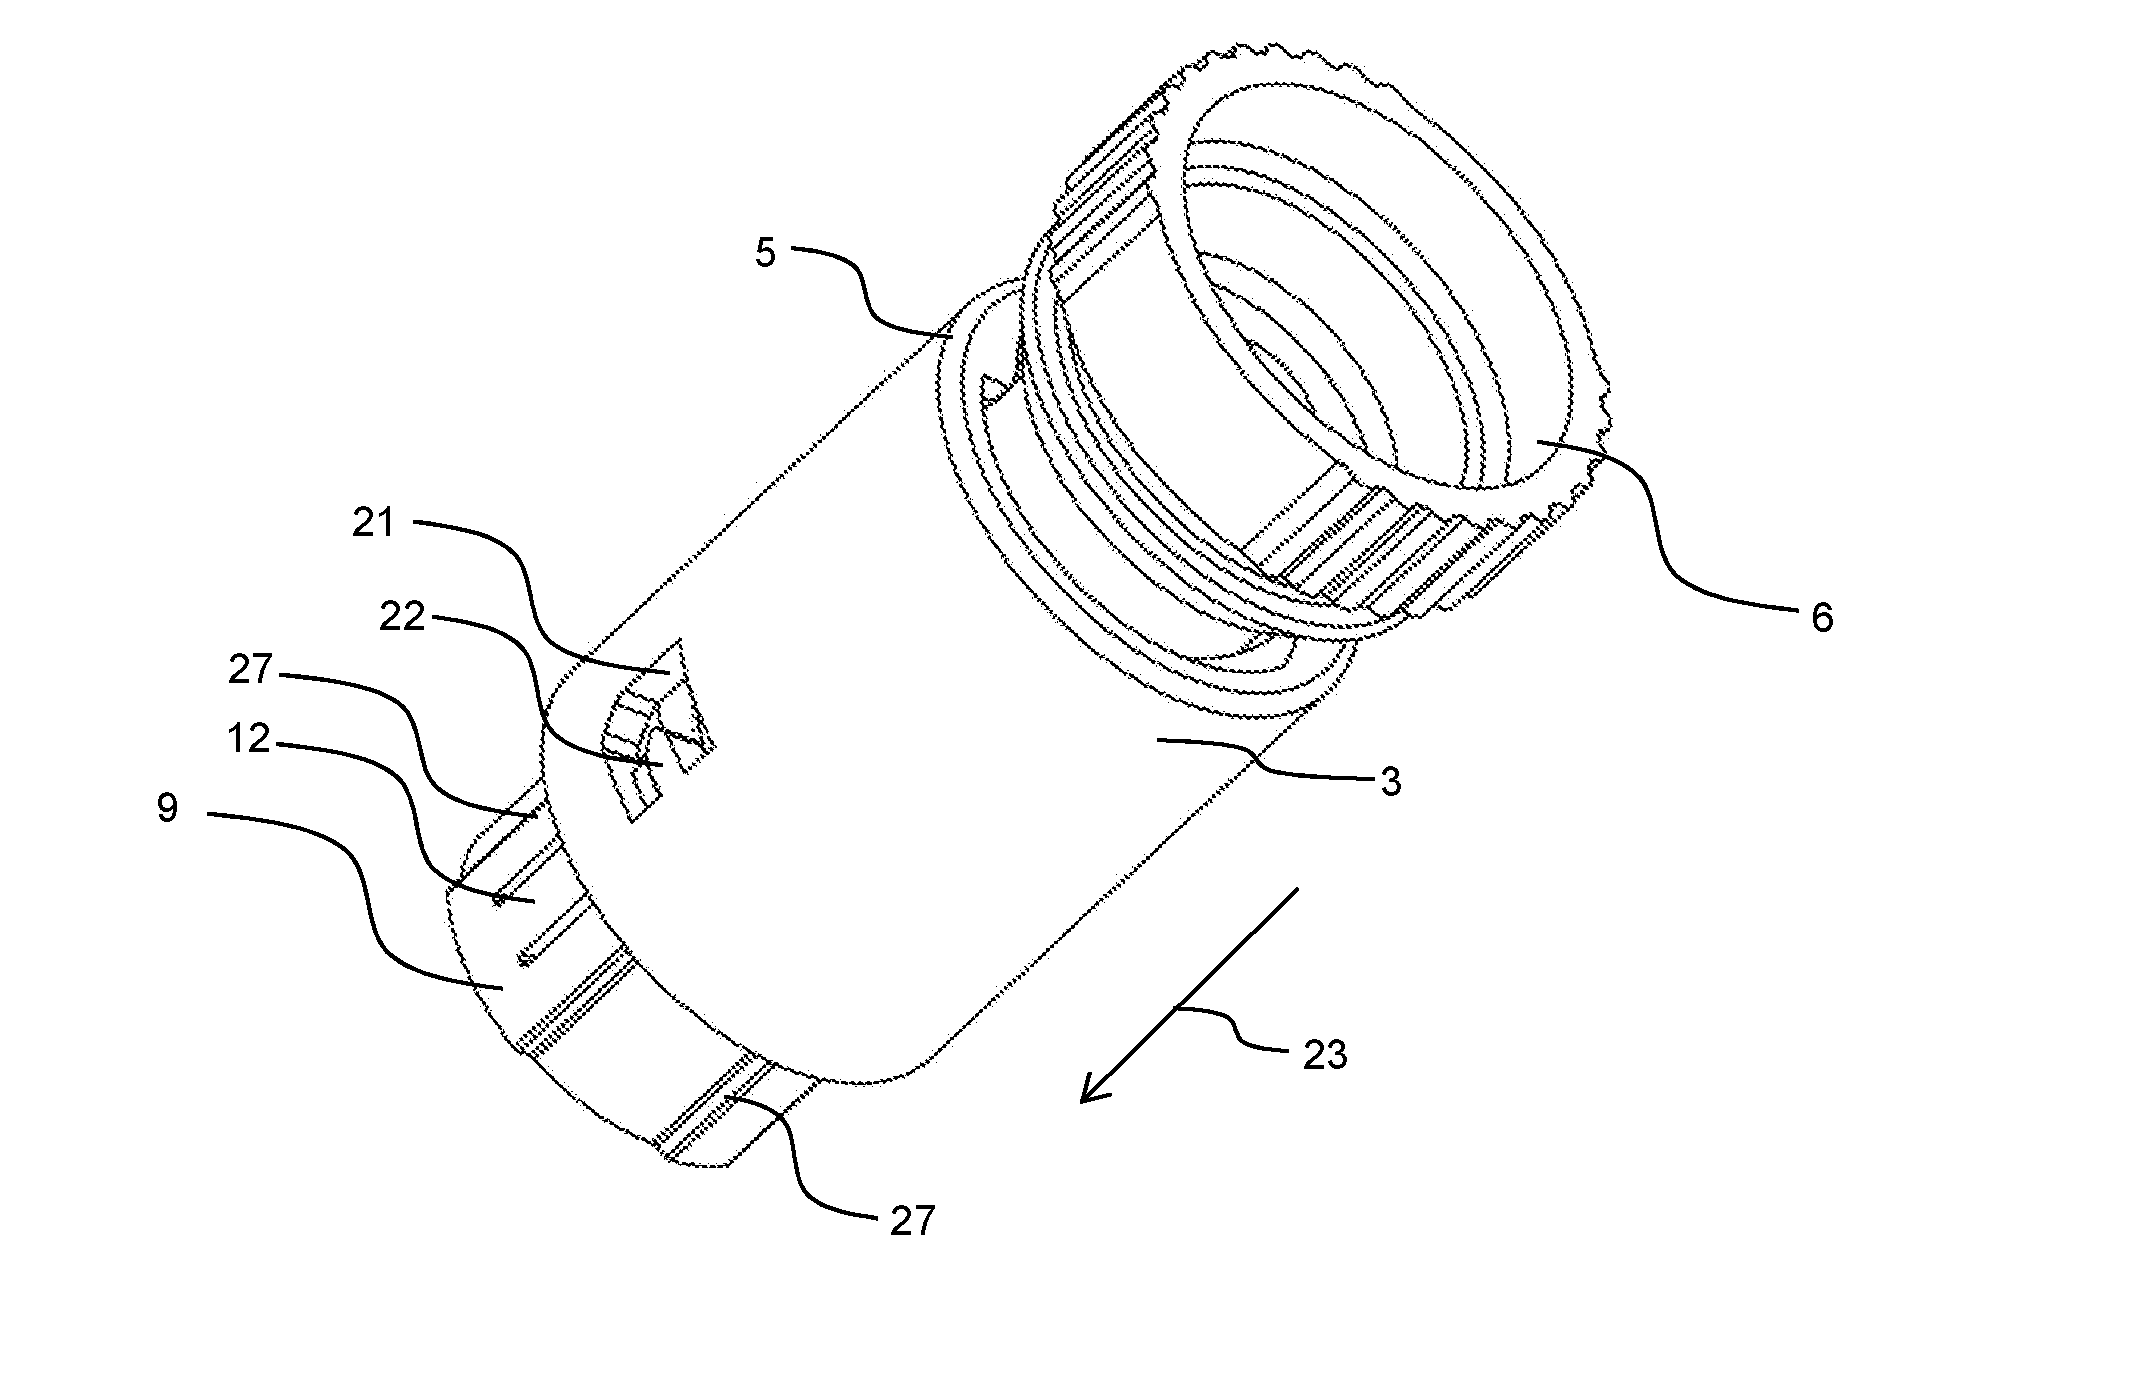 Needlefree valve device